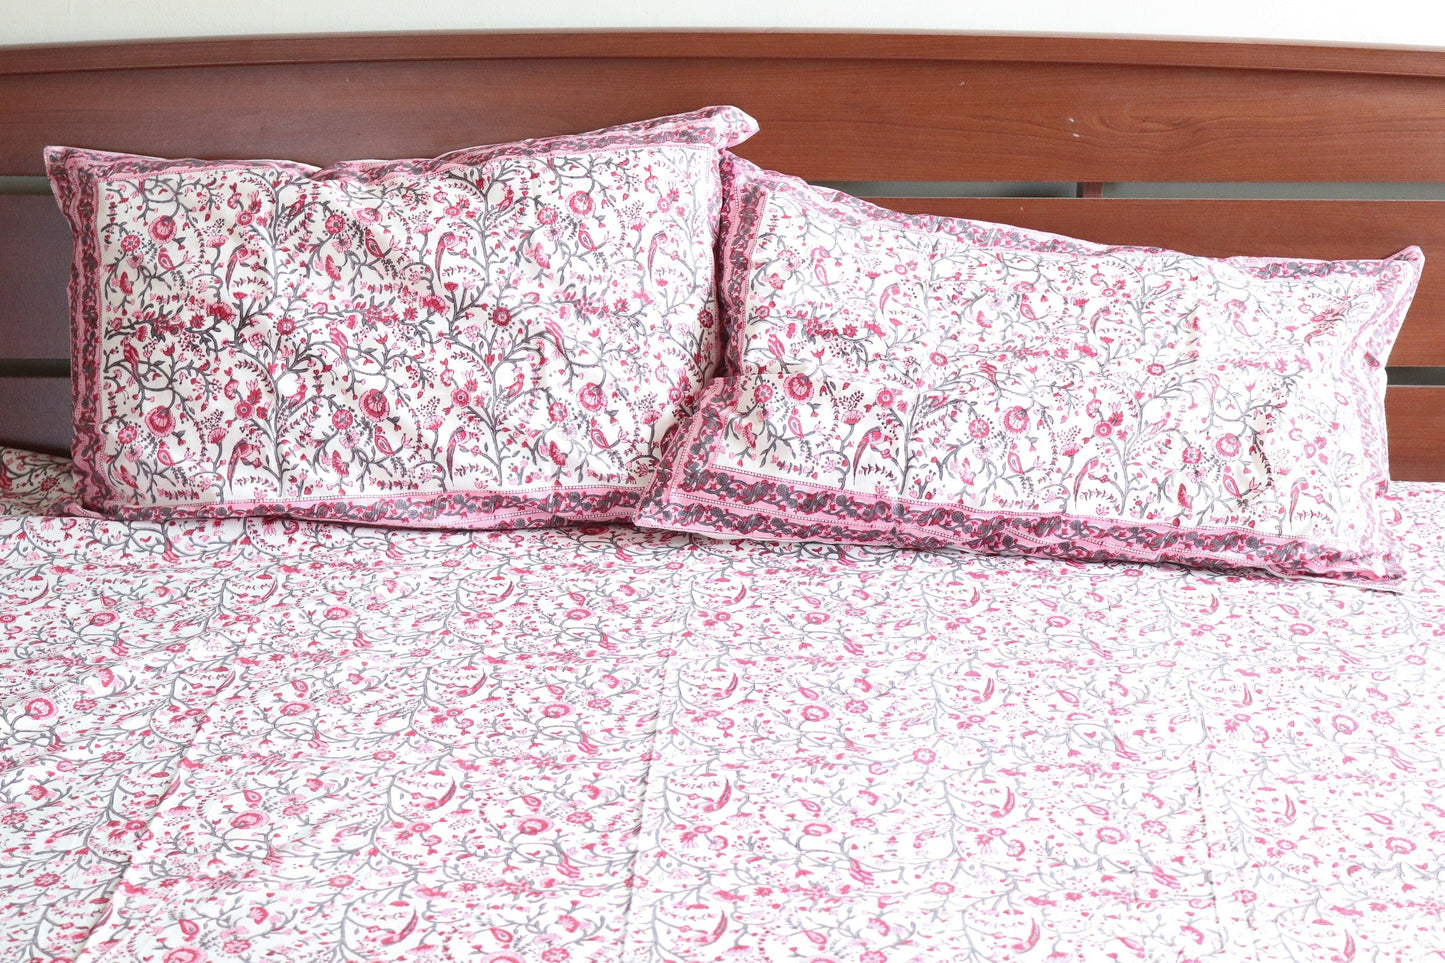 Block print bed sheet and pillow cases - Pink floral bird bedsheet set-  King and queen size bedsheet